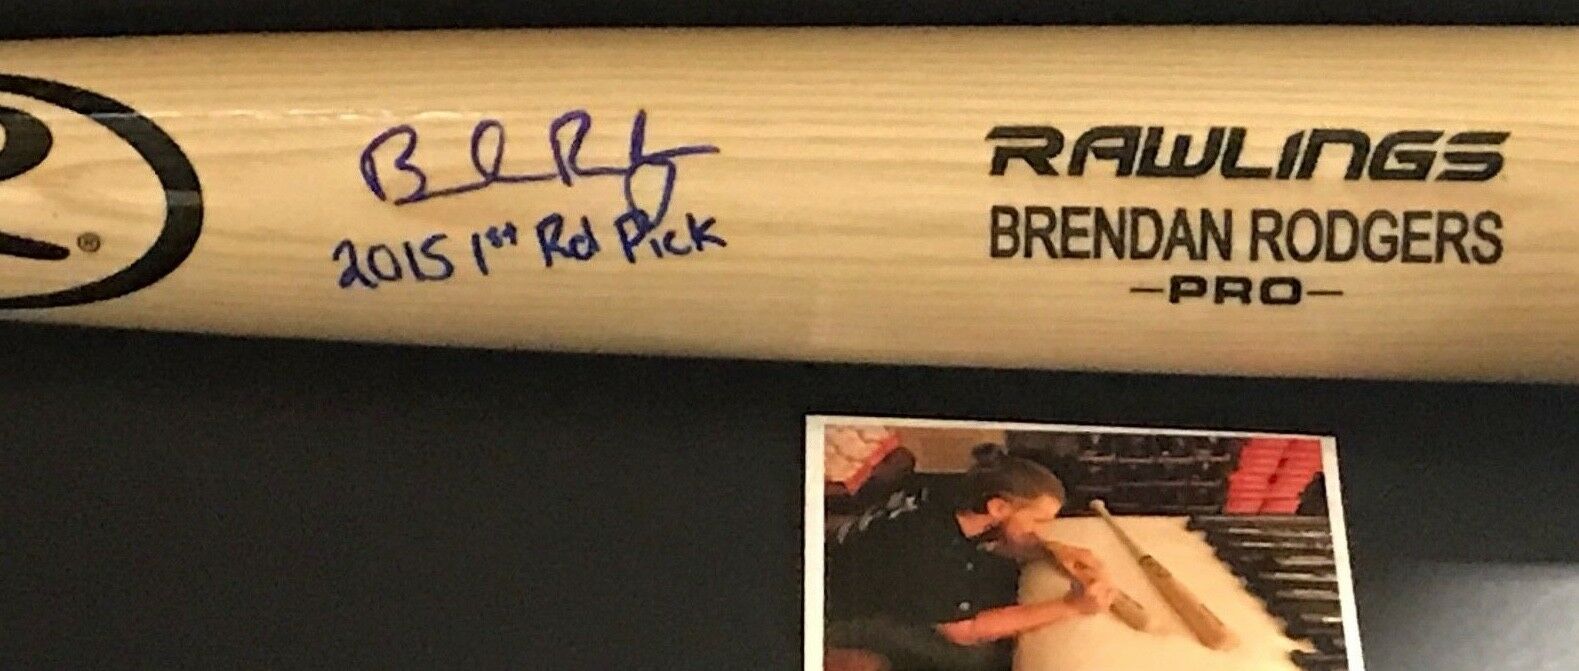 Brendan Rodgers Rockies Autographed Signed Black Full Size Bat 2015 1st Rd Pick